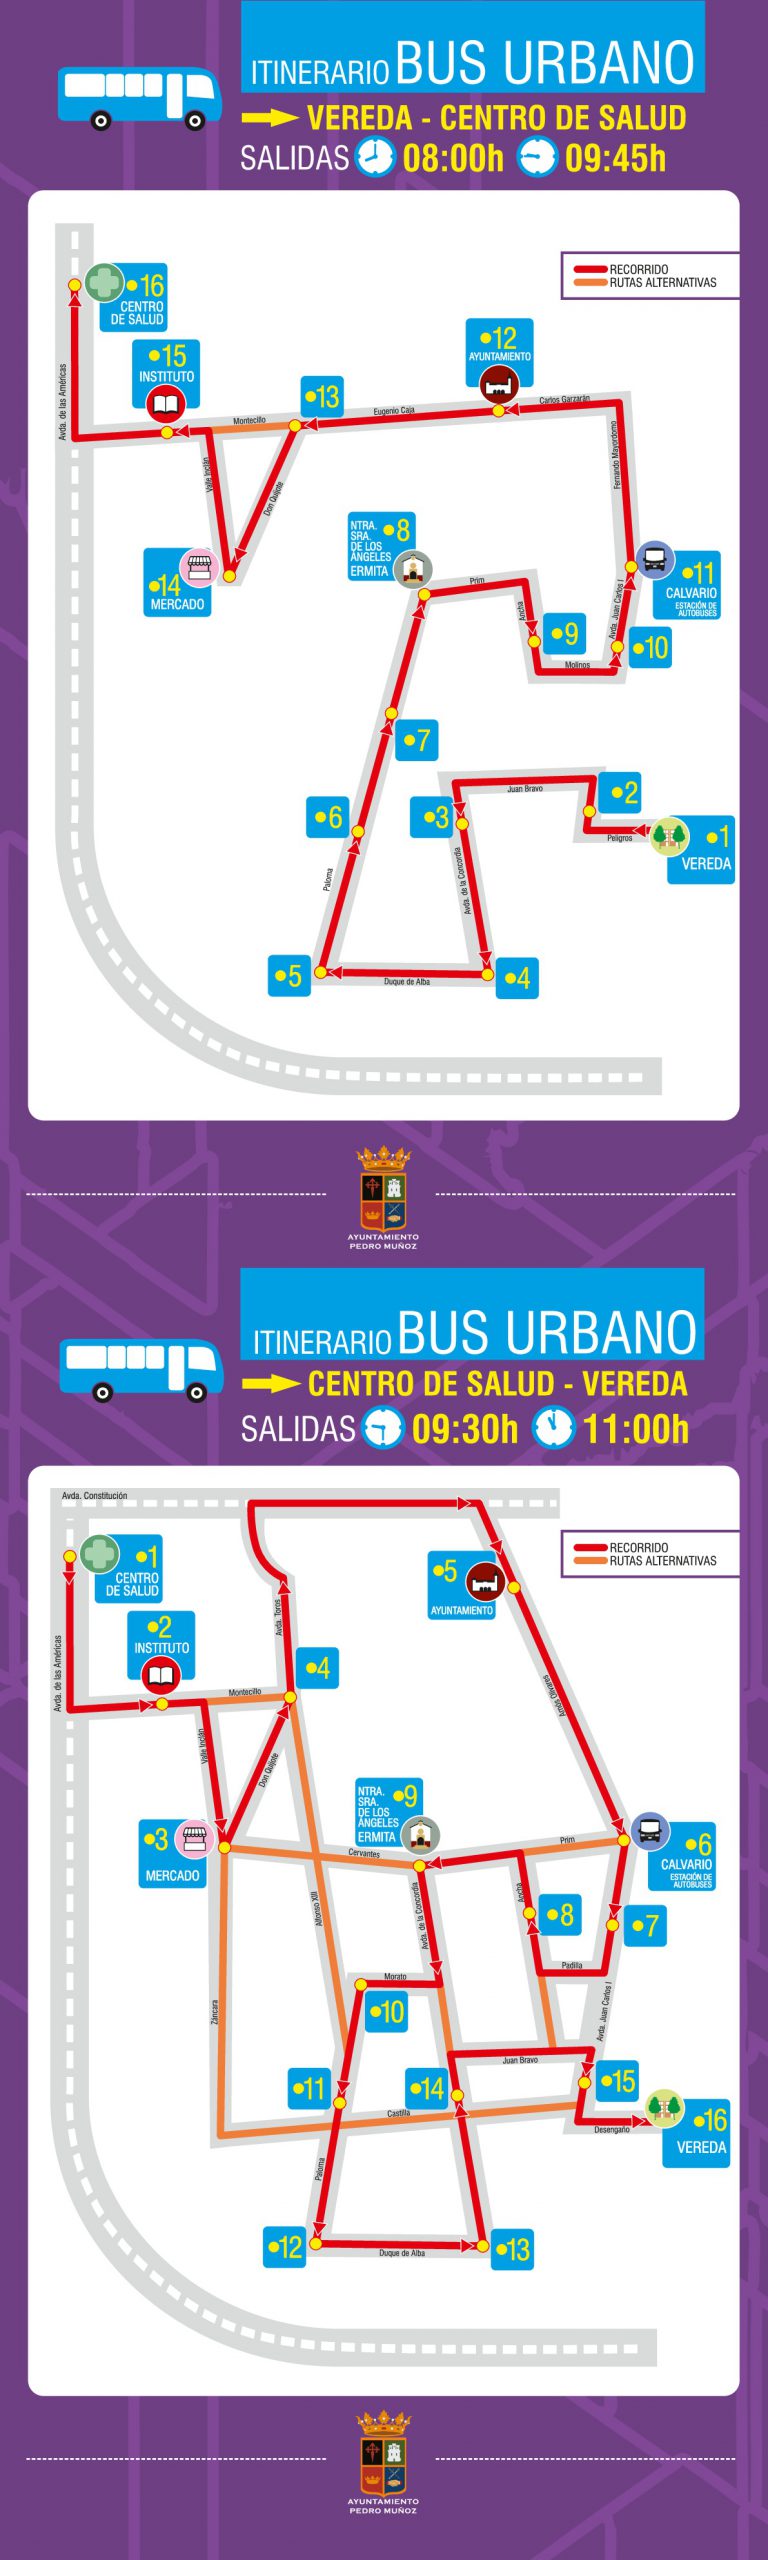 Infografia-autobus-urbano-001.jpg